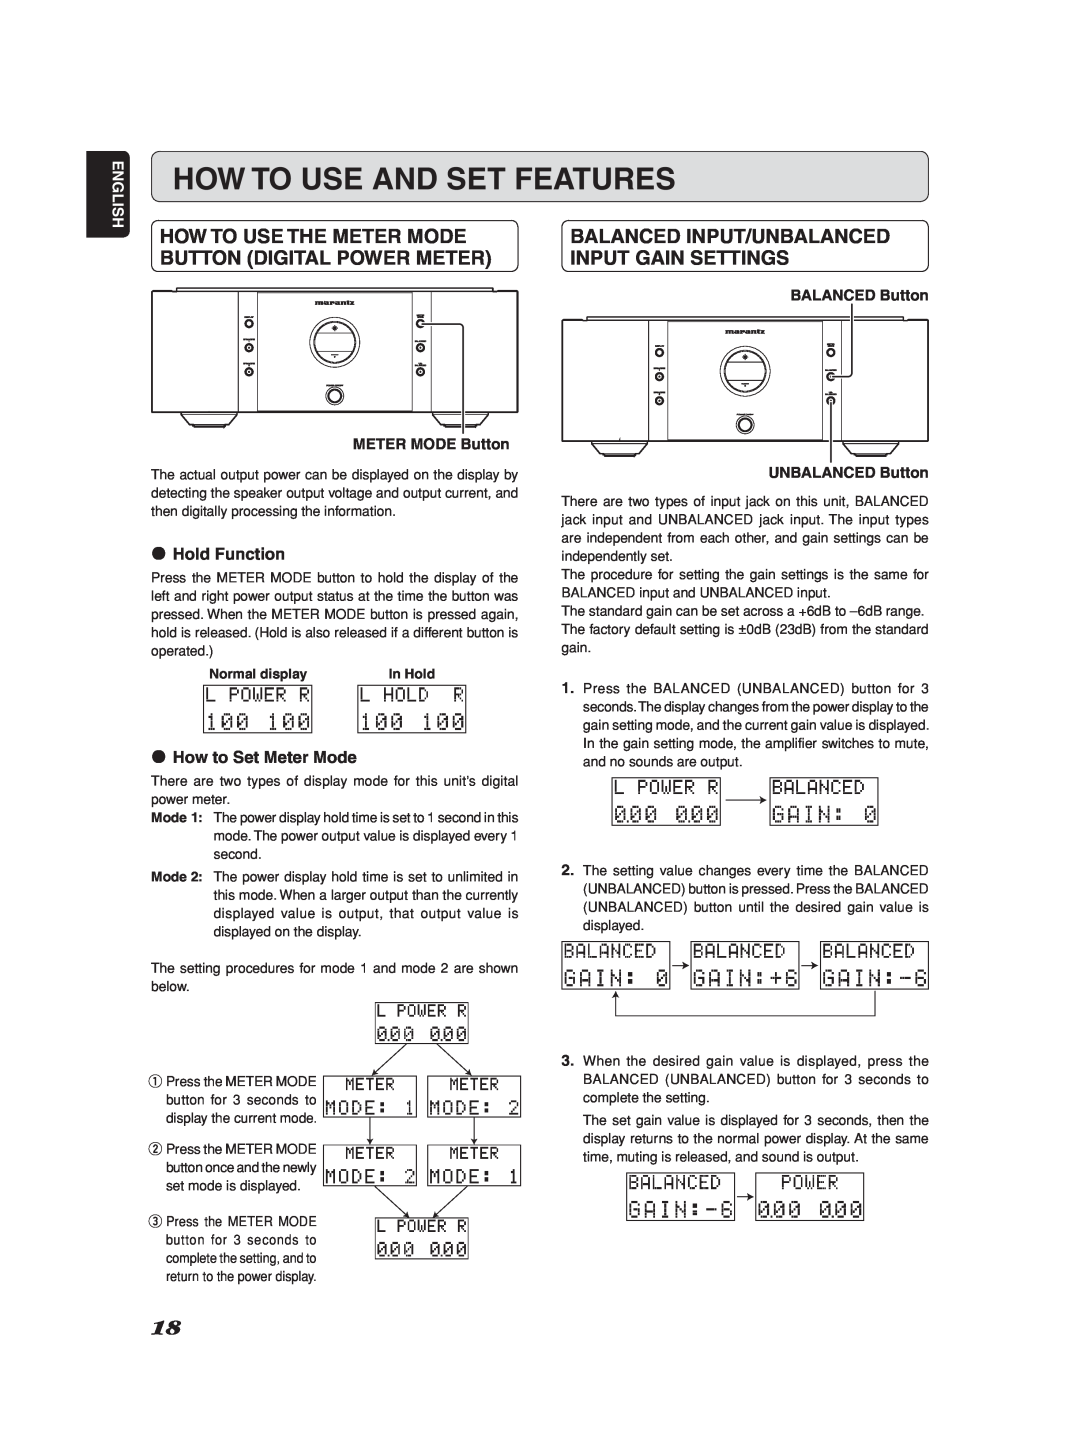 Marantz SM-1151 manual How To Use And Set Features, Balanced Input/Unbalanced Input Gain Settings, ¶Hold Function, English 